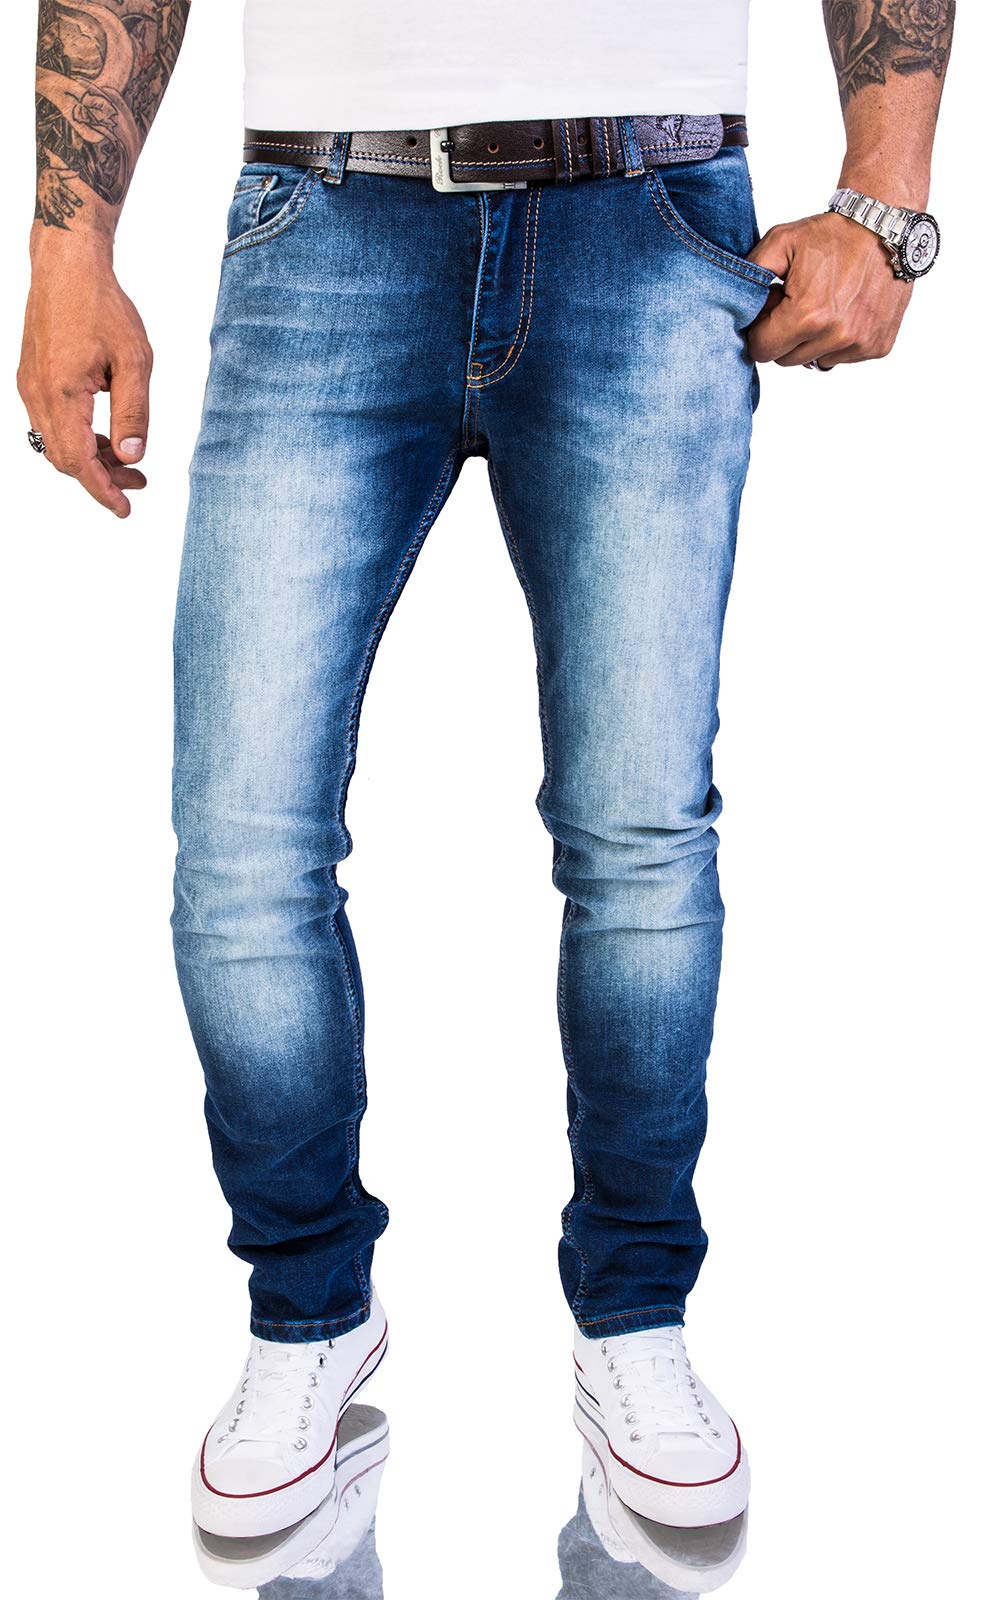 Rock Creek Herren Jeans Hose Slim Fit Stretch Jeans Herrenjeans Herrenhose Denim Stonewashed Blau Raw RC-2151 Super Washed W38 L32